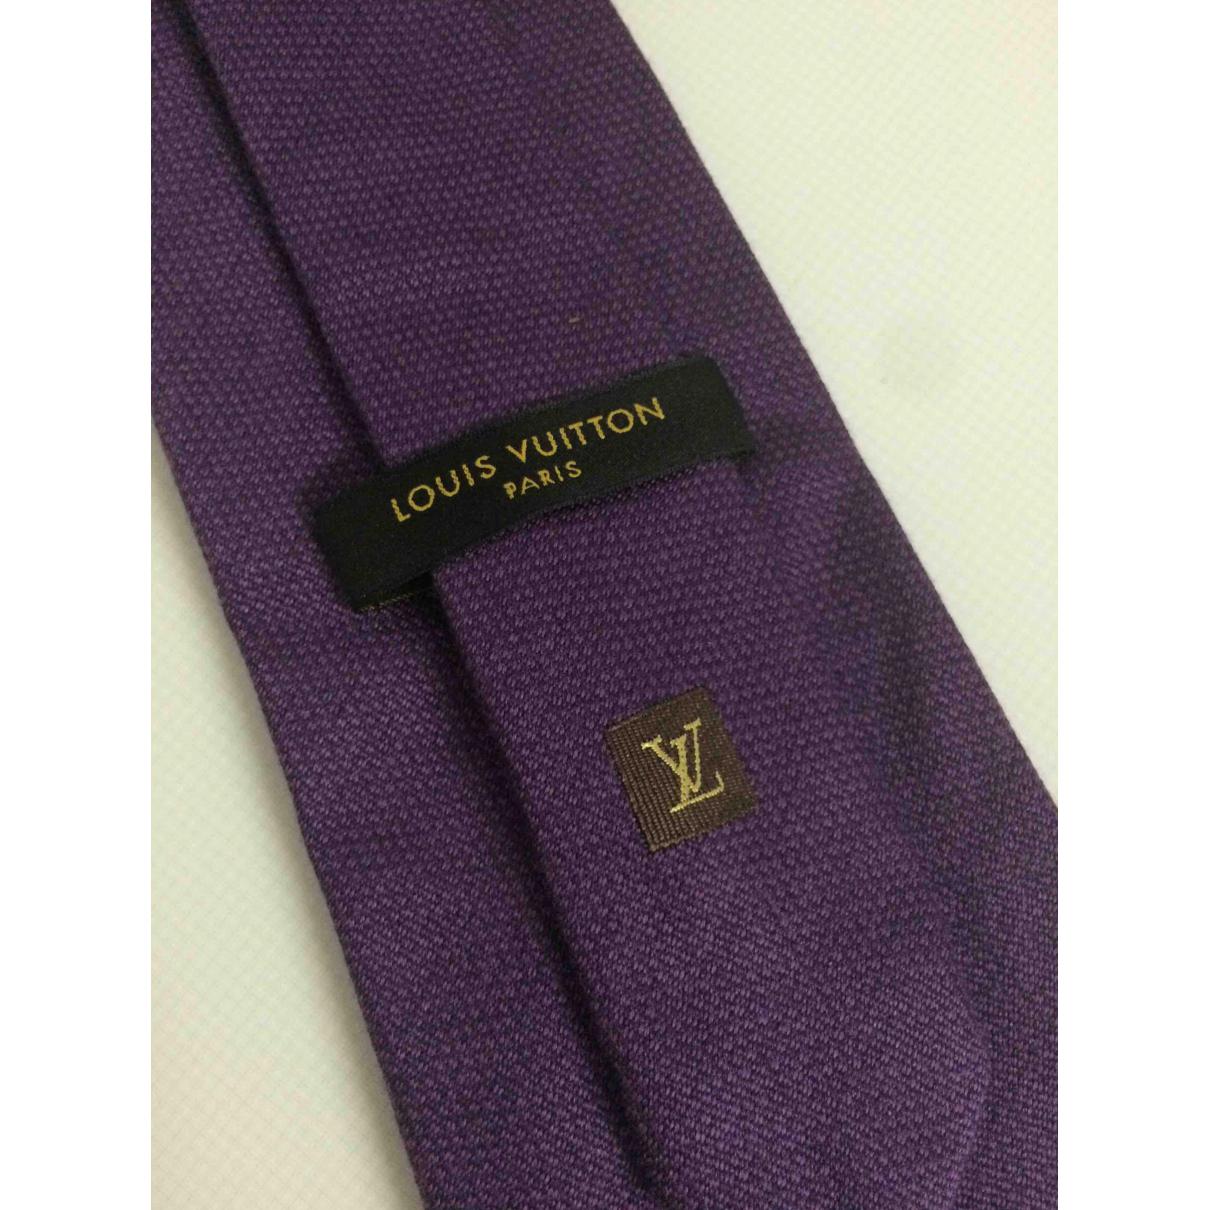 Louis Vuitton Tie Costco | semashow.com